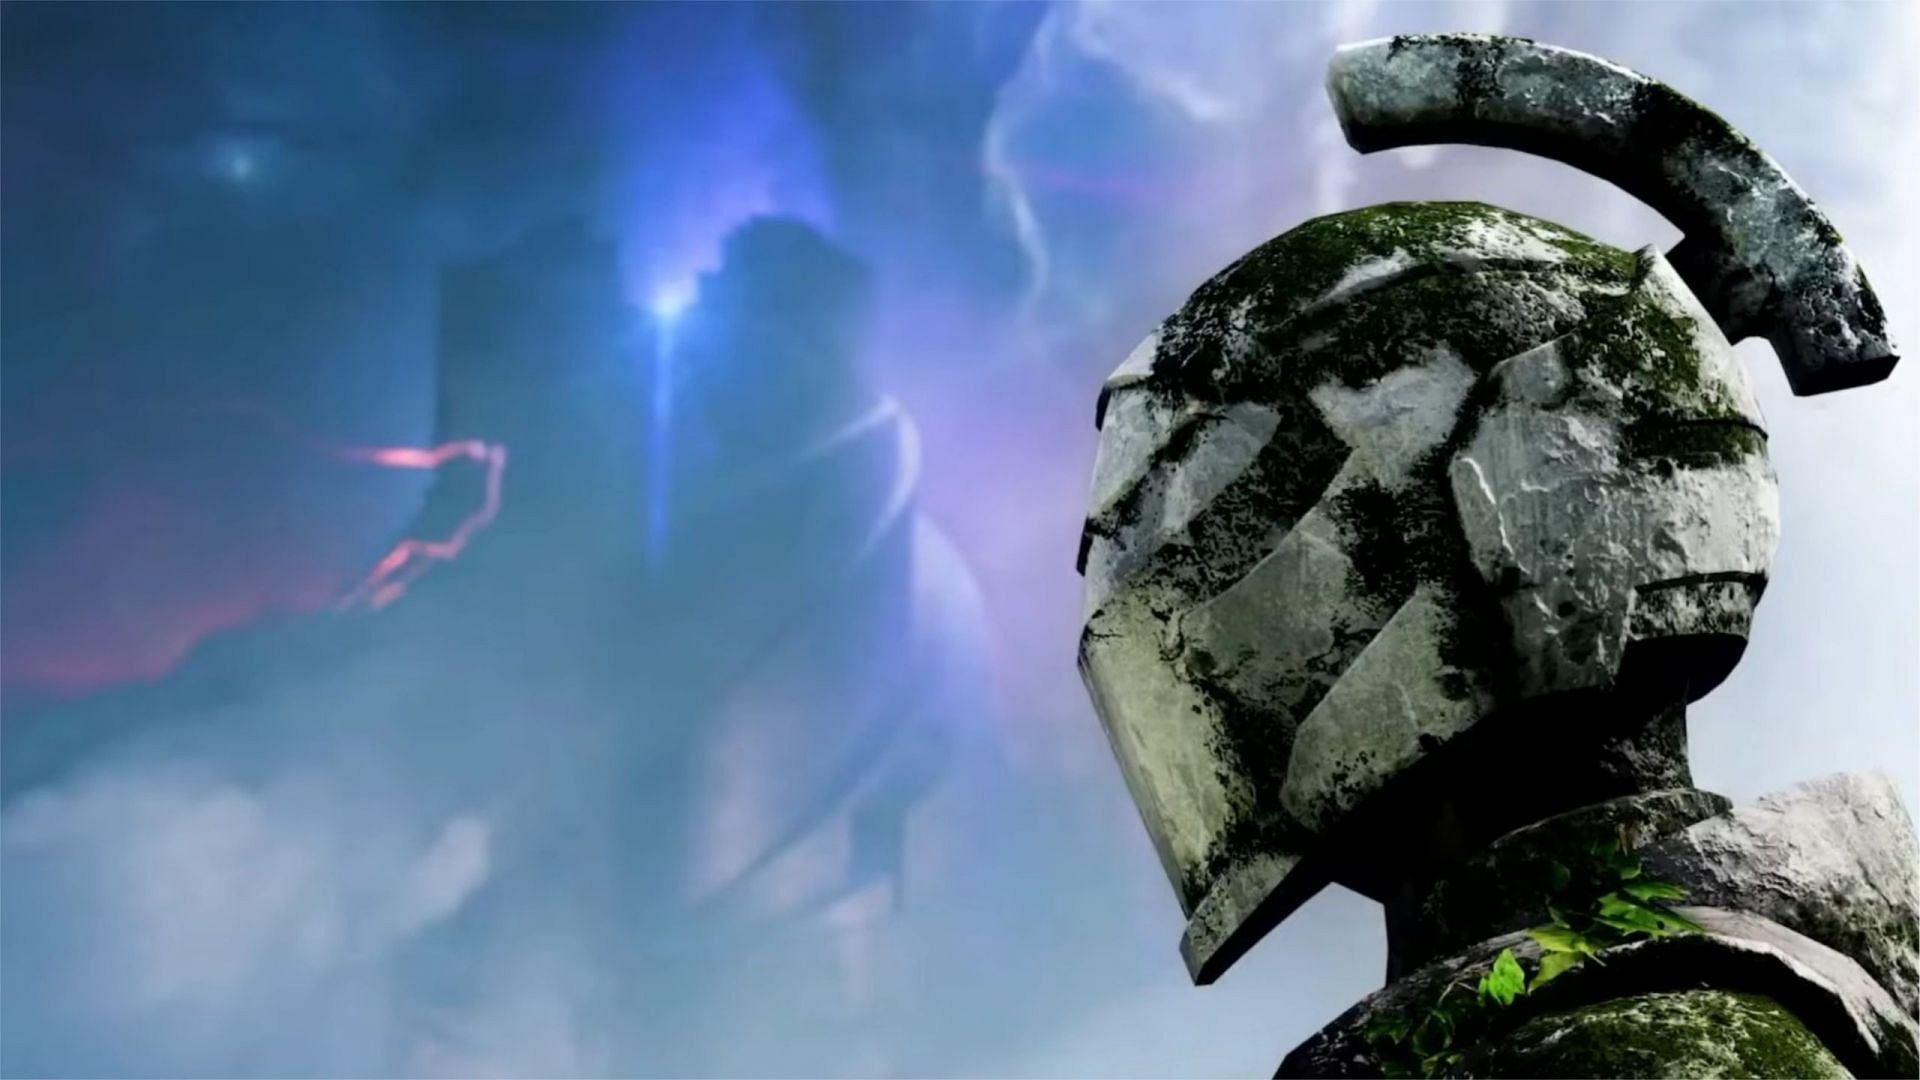 Saint-14 statue shown in the Pale Heart Destiny 2 The Final Shape trailer 